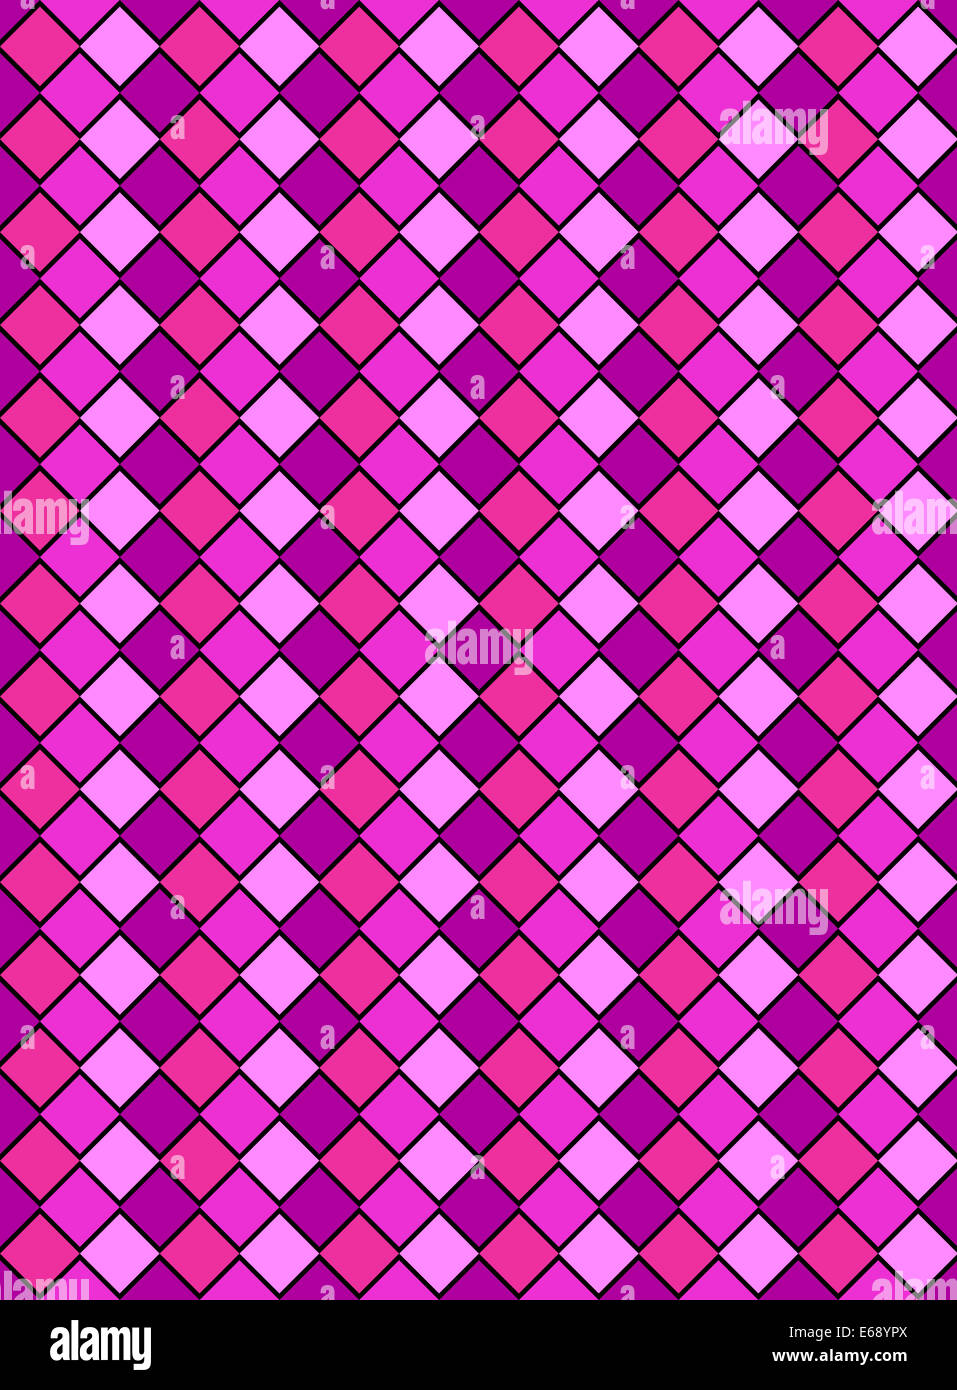 Pink and purple variegated diamond snake style wallpaper texture pattern. Stock Photo